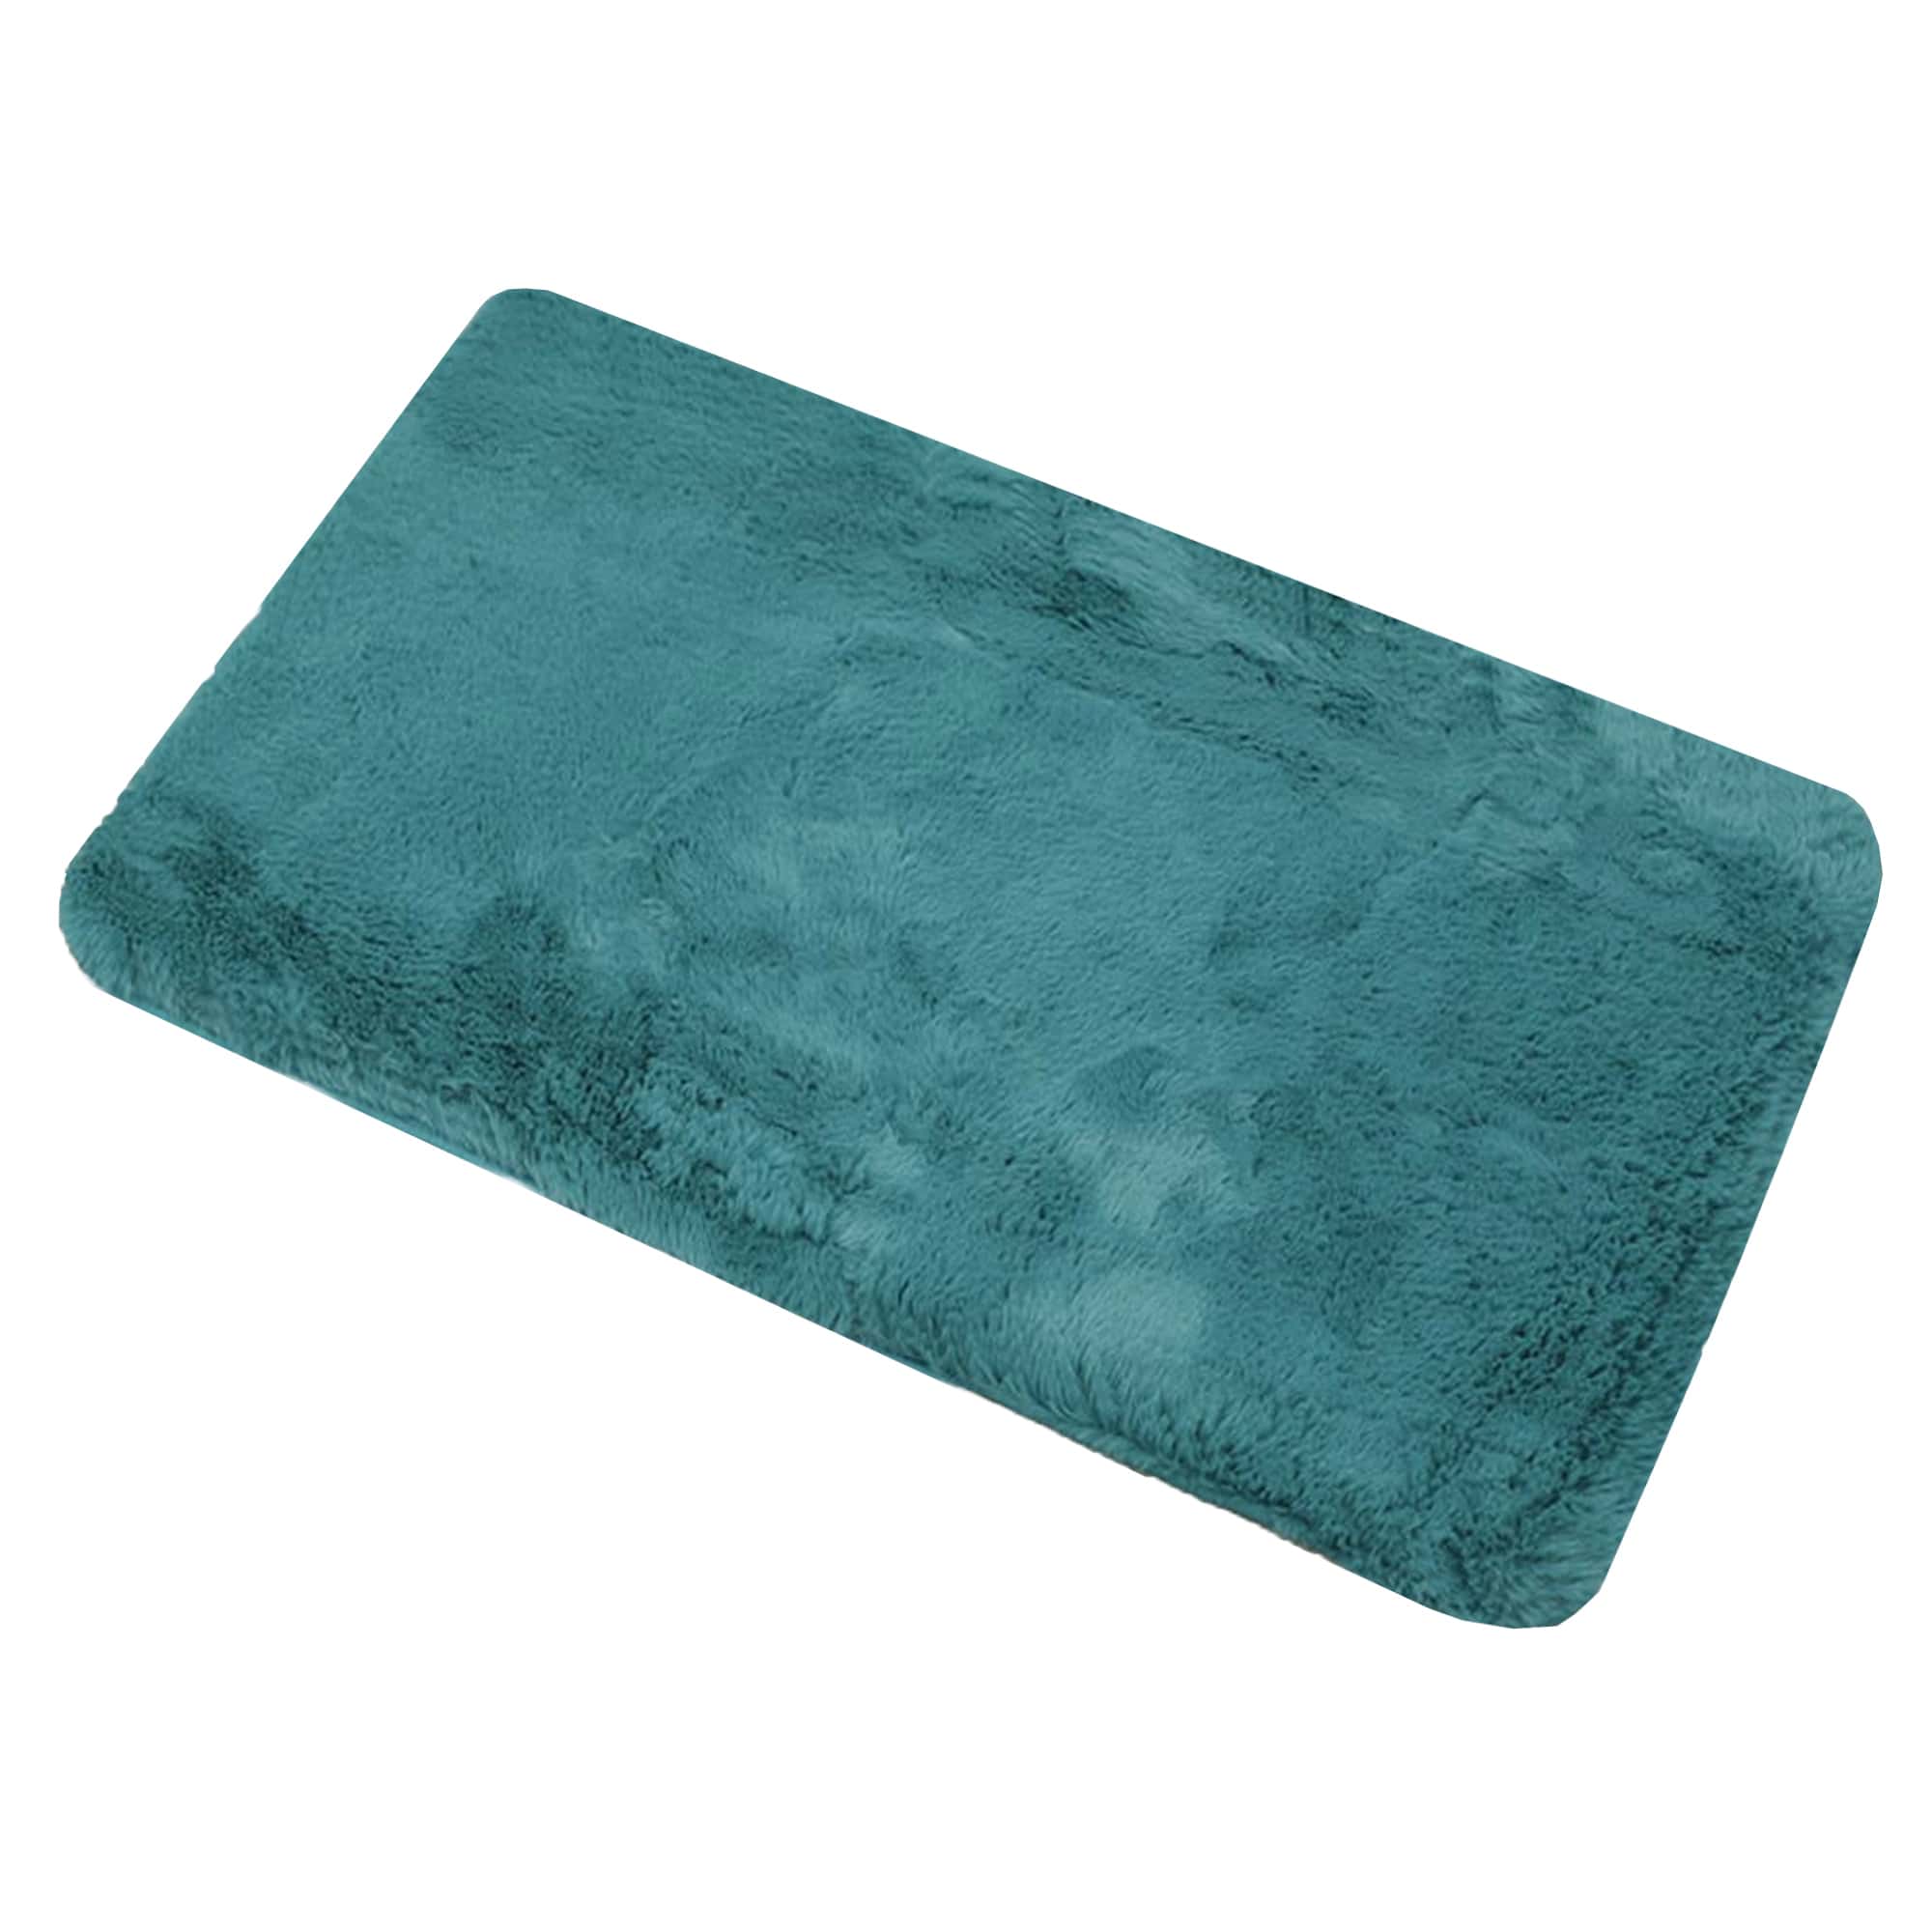 super soft bath mat plush effect in teal color